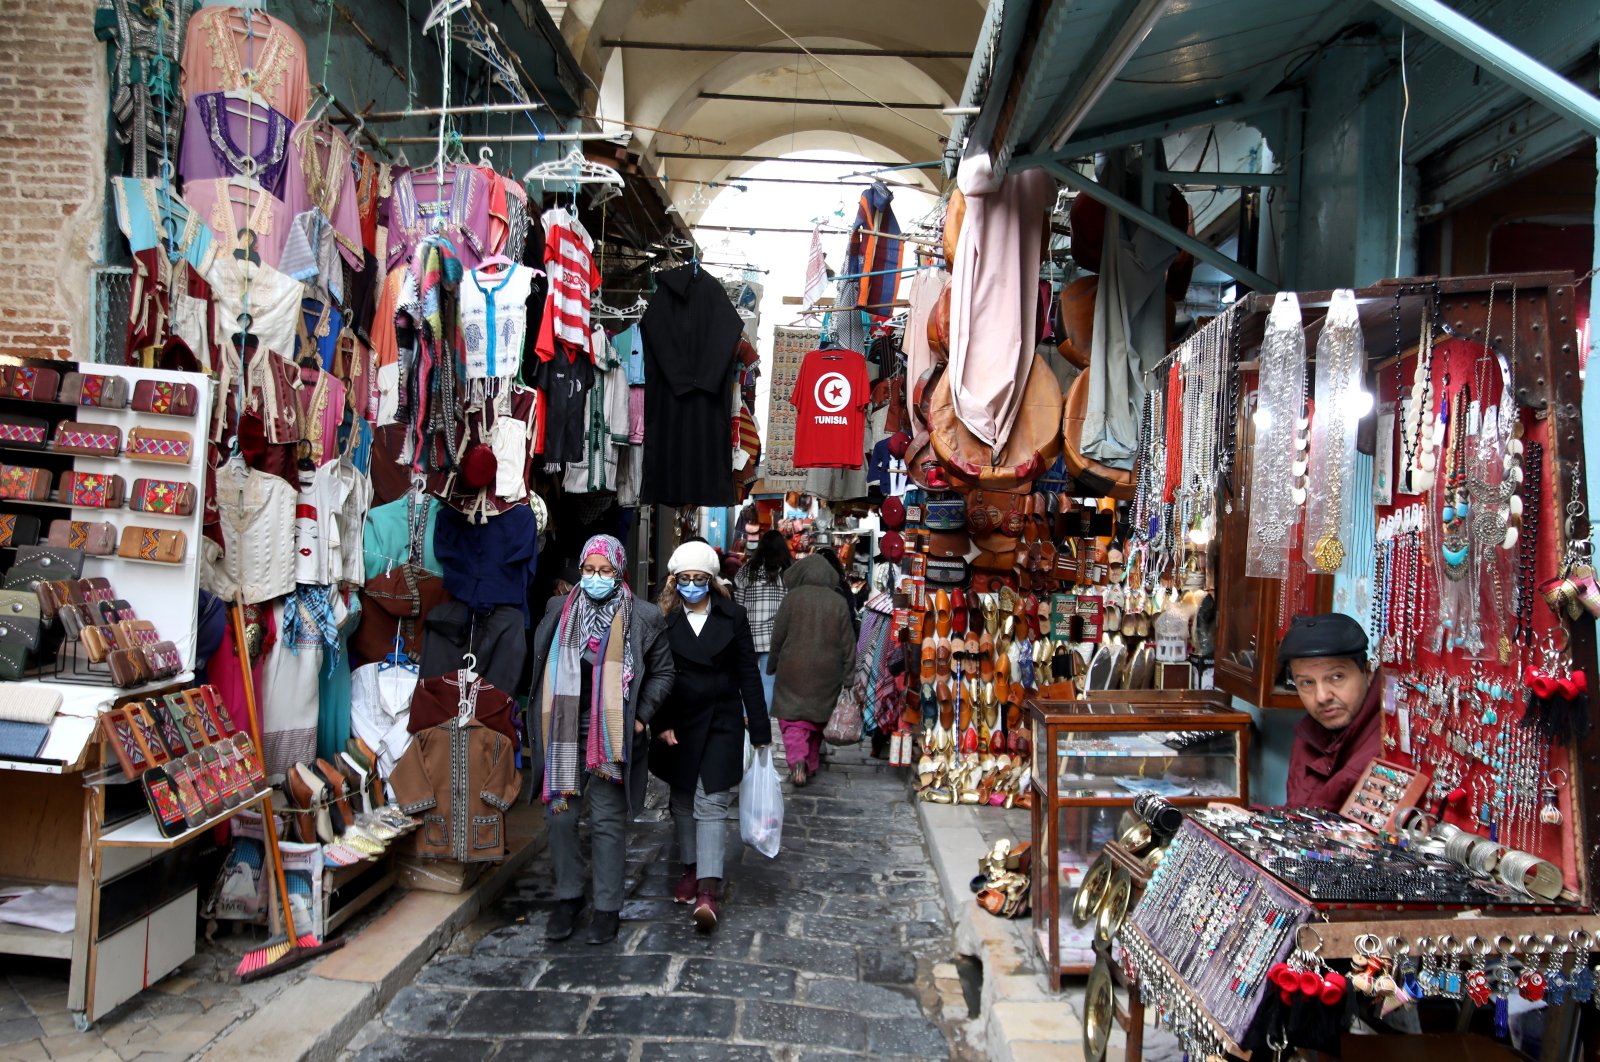 People shop in the old city in Tunis, Tunisia, Jan. 13, 2022. (EPA Photo)